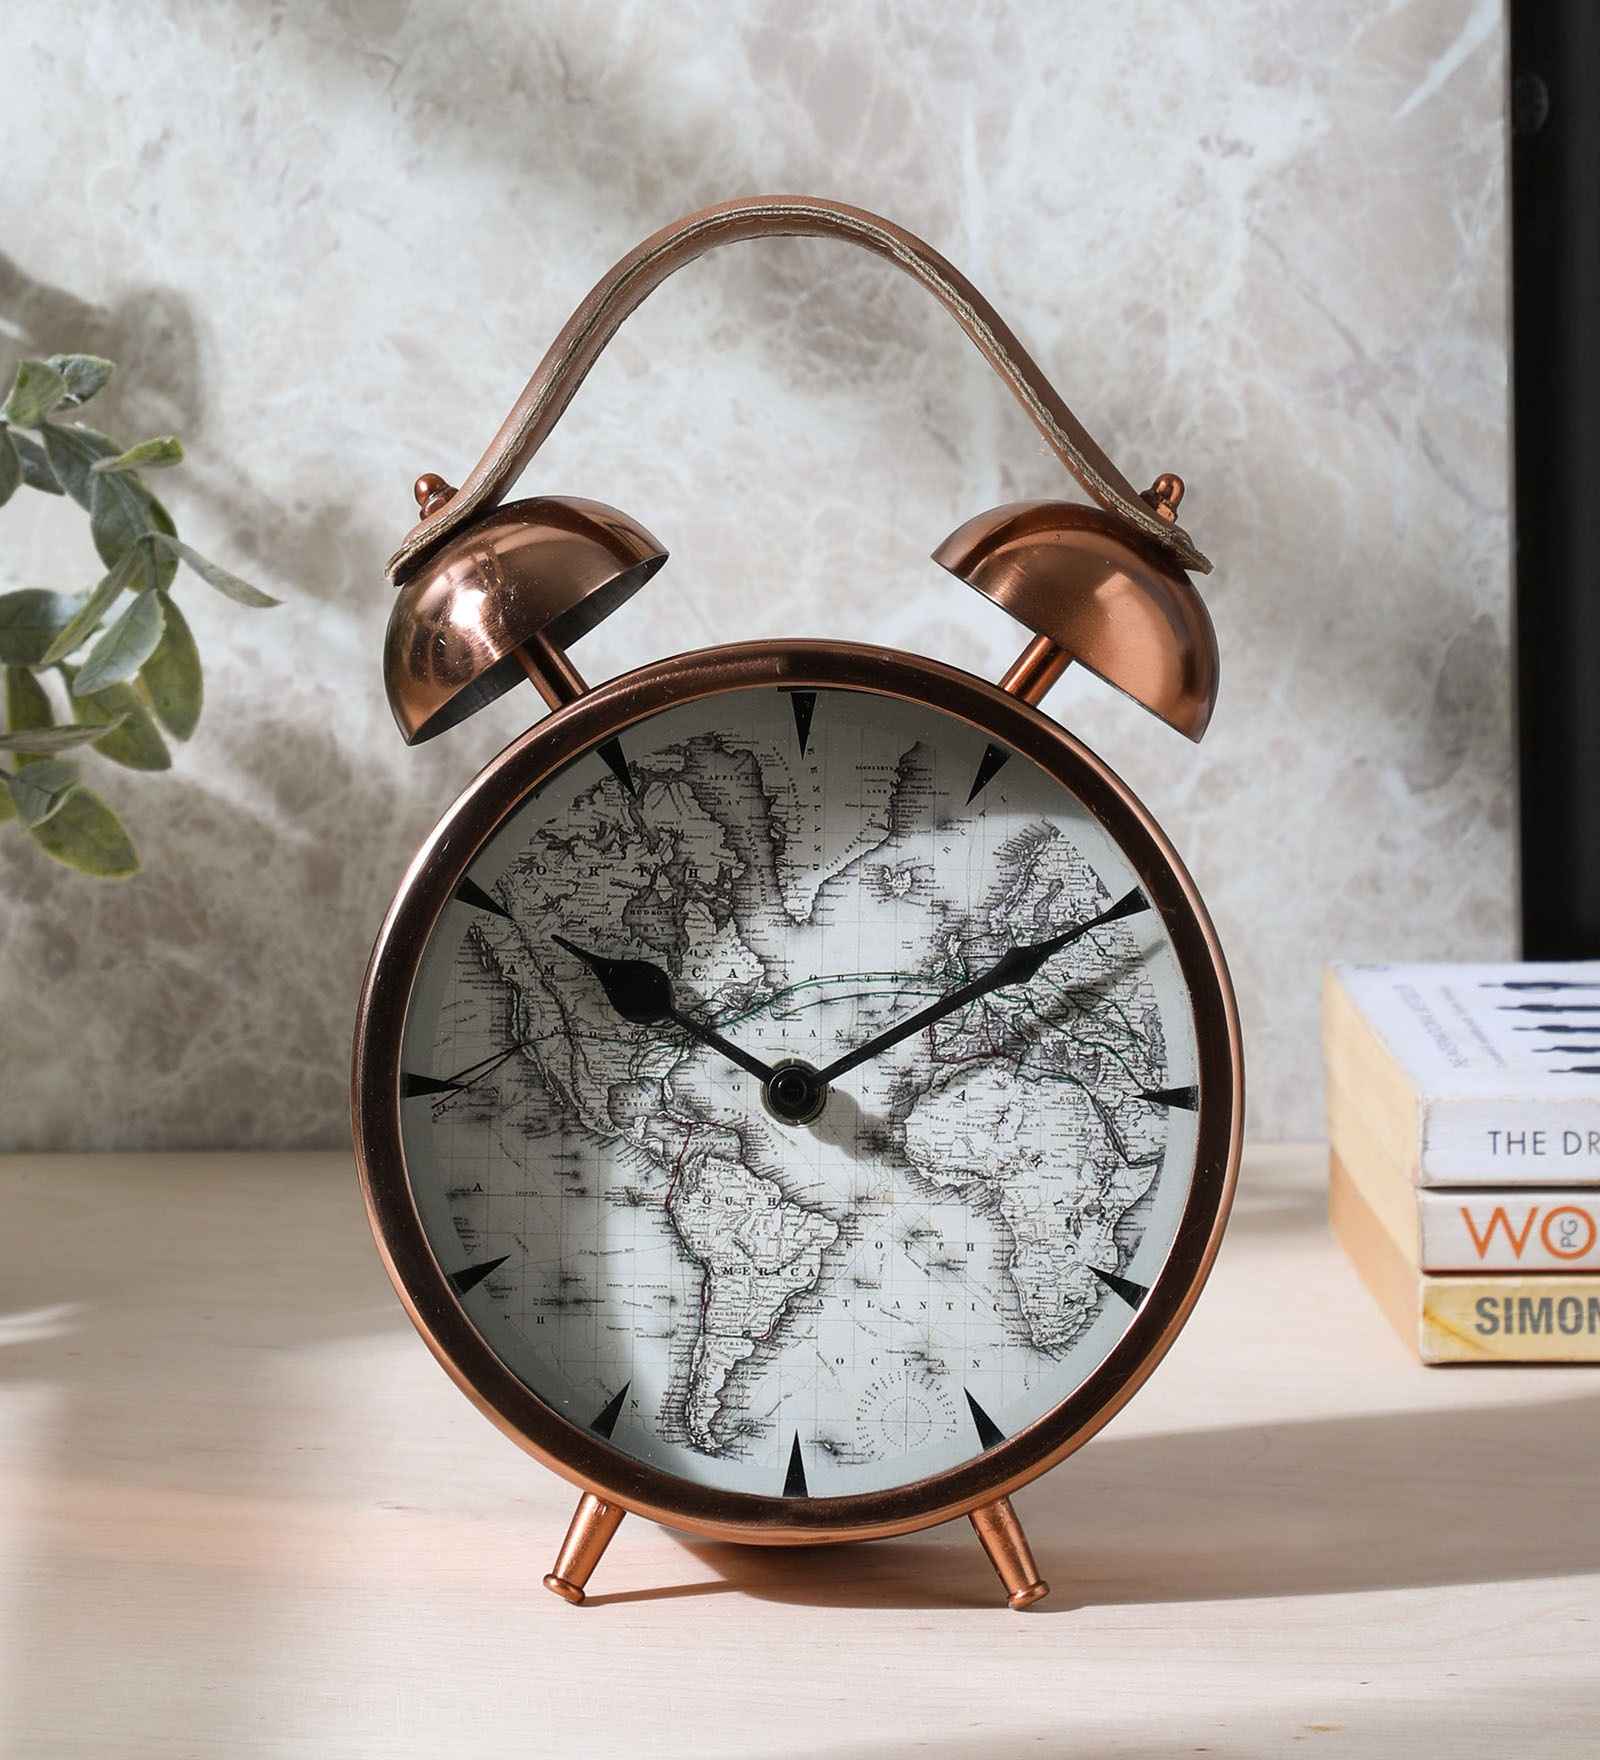 Copper Antique Table Clock